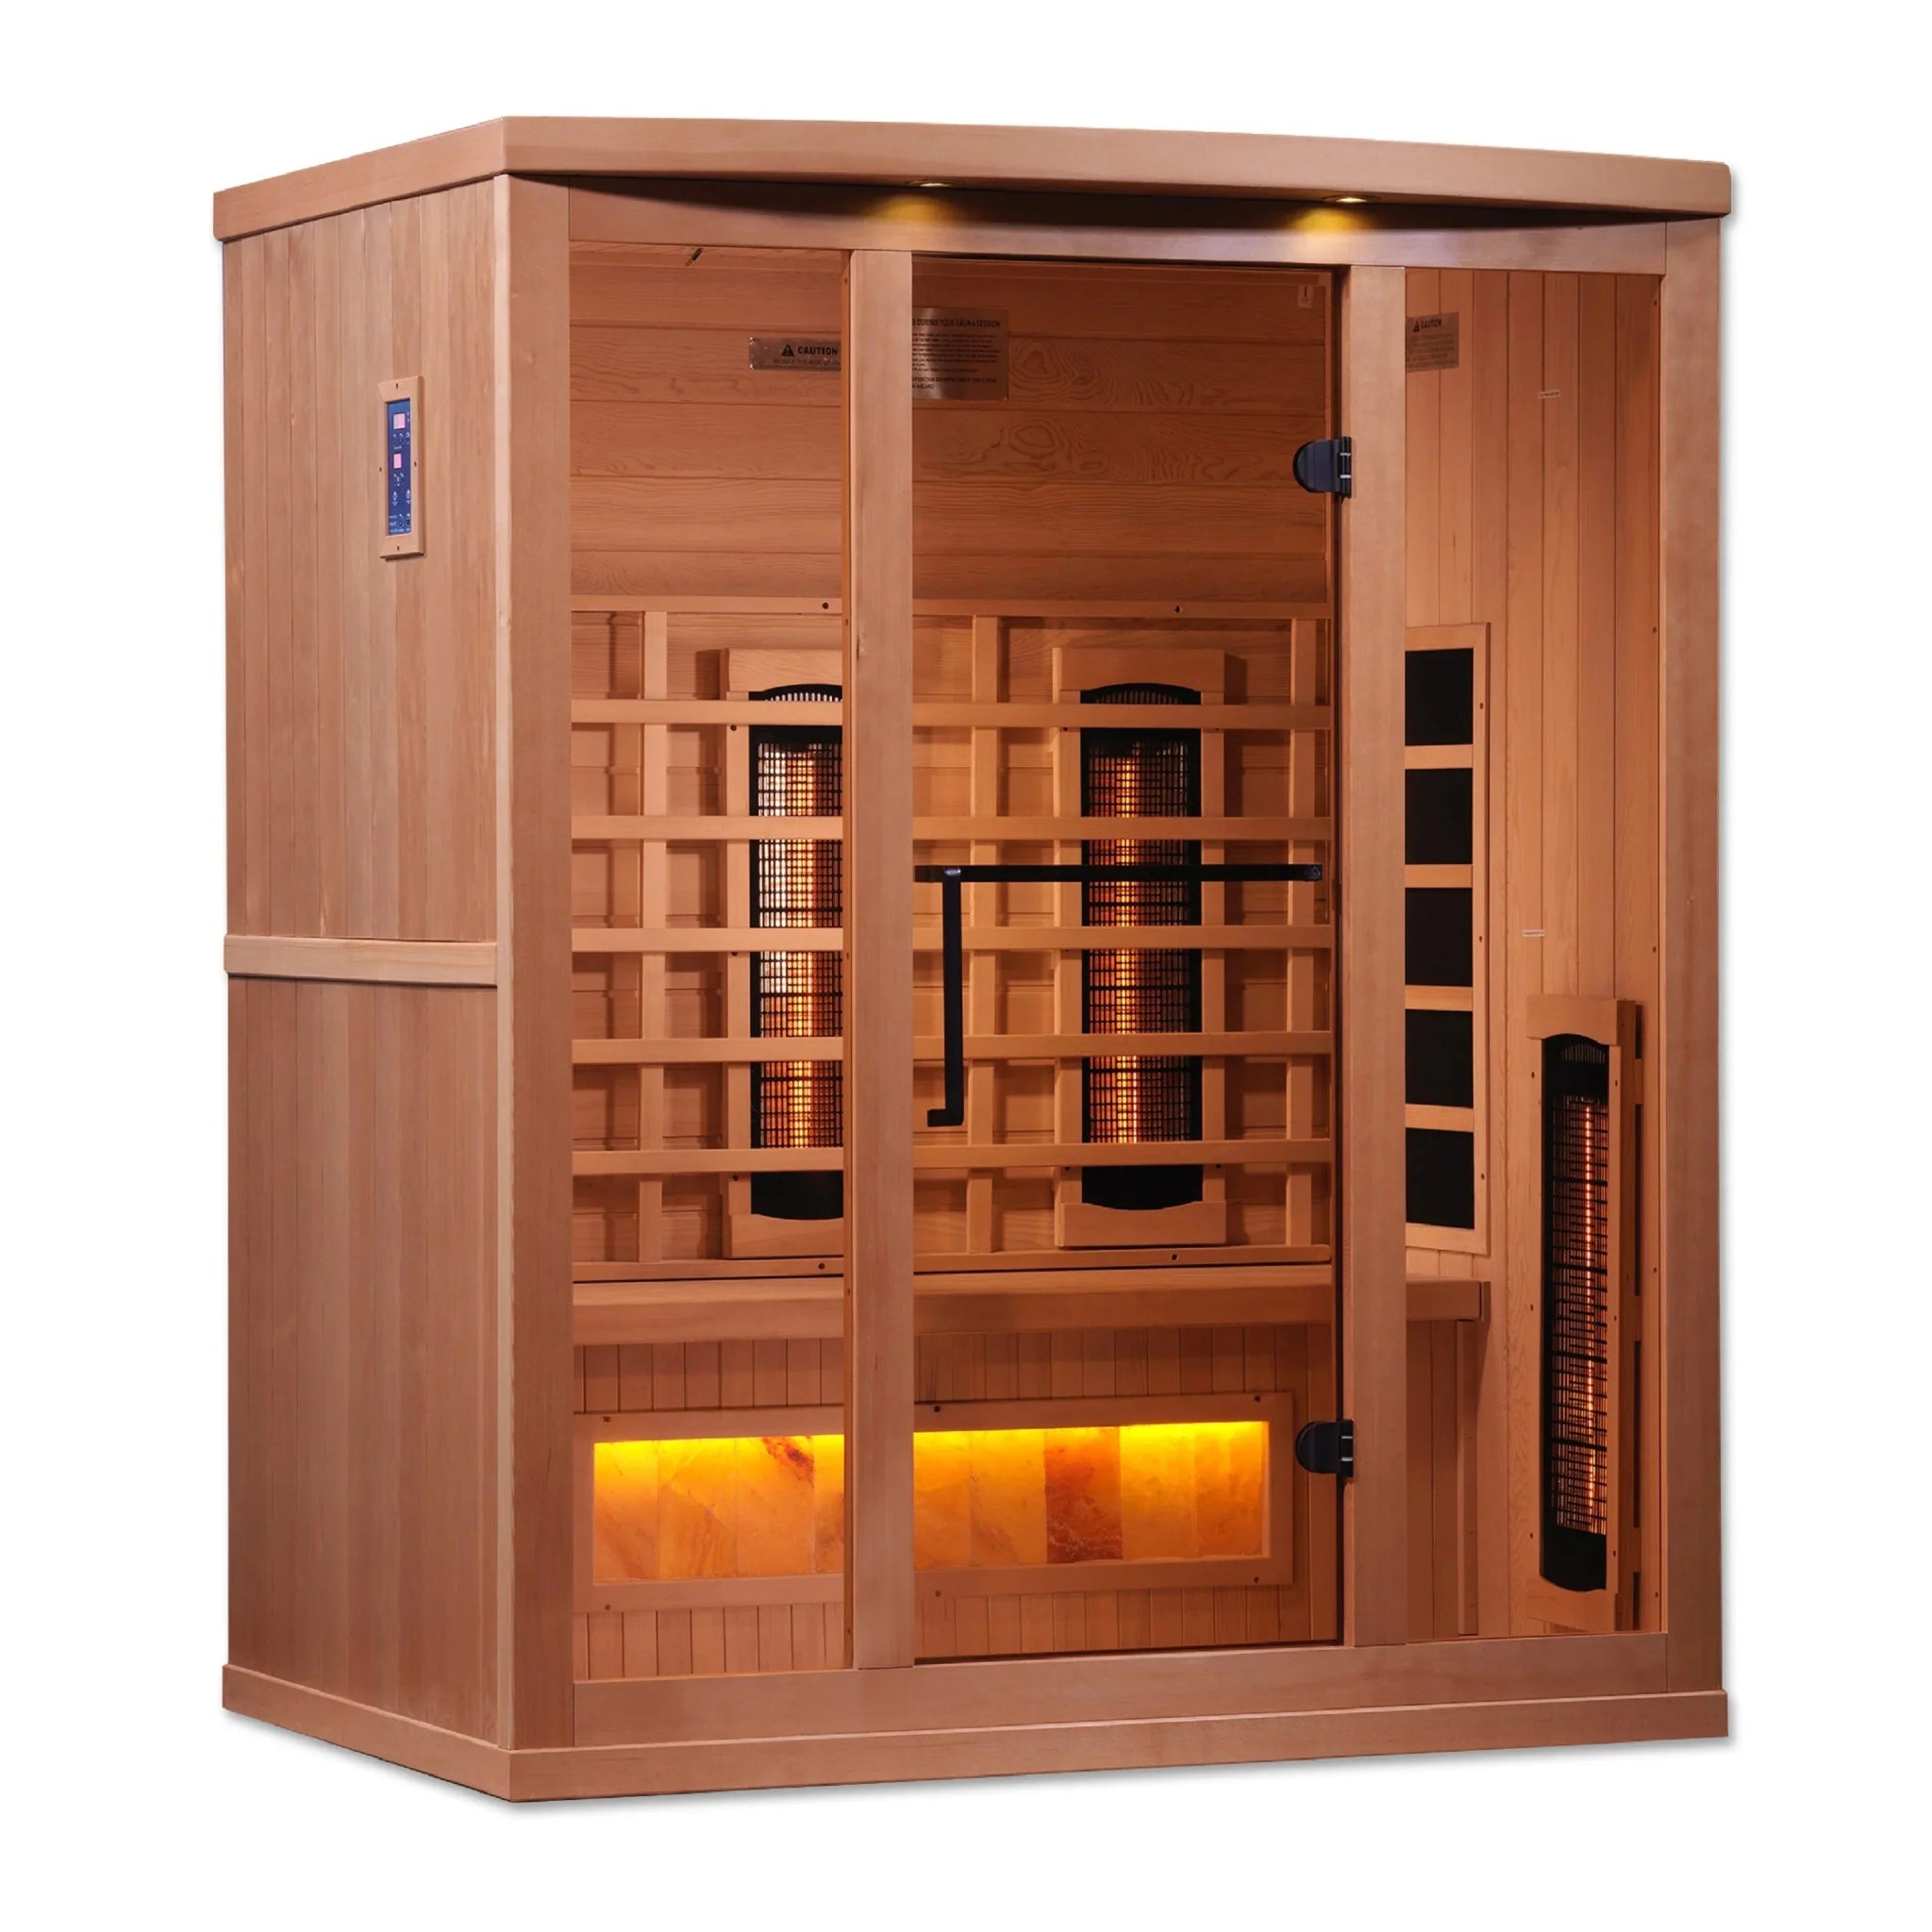 Golden Design Reserve Edition GDI-8030-02 Full Spectrum Sauna with Himalayan Salt Bar - The Sauna World